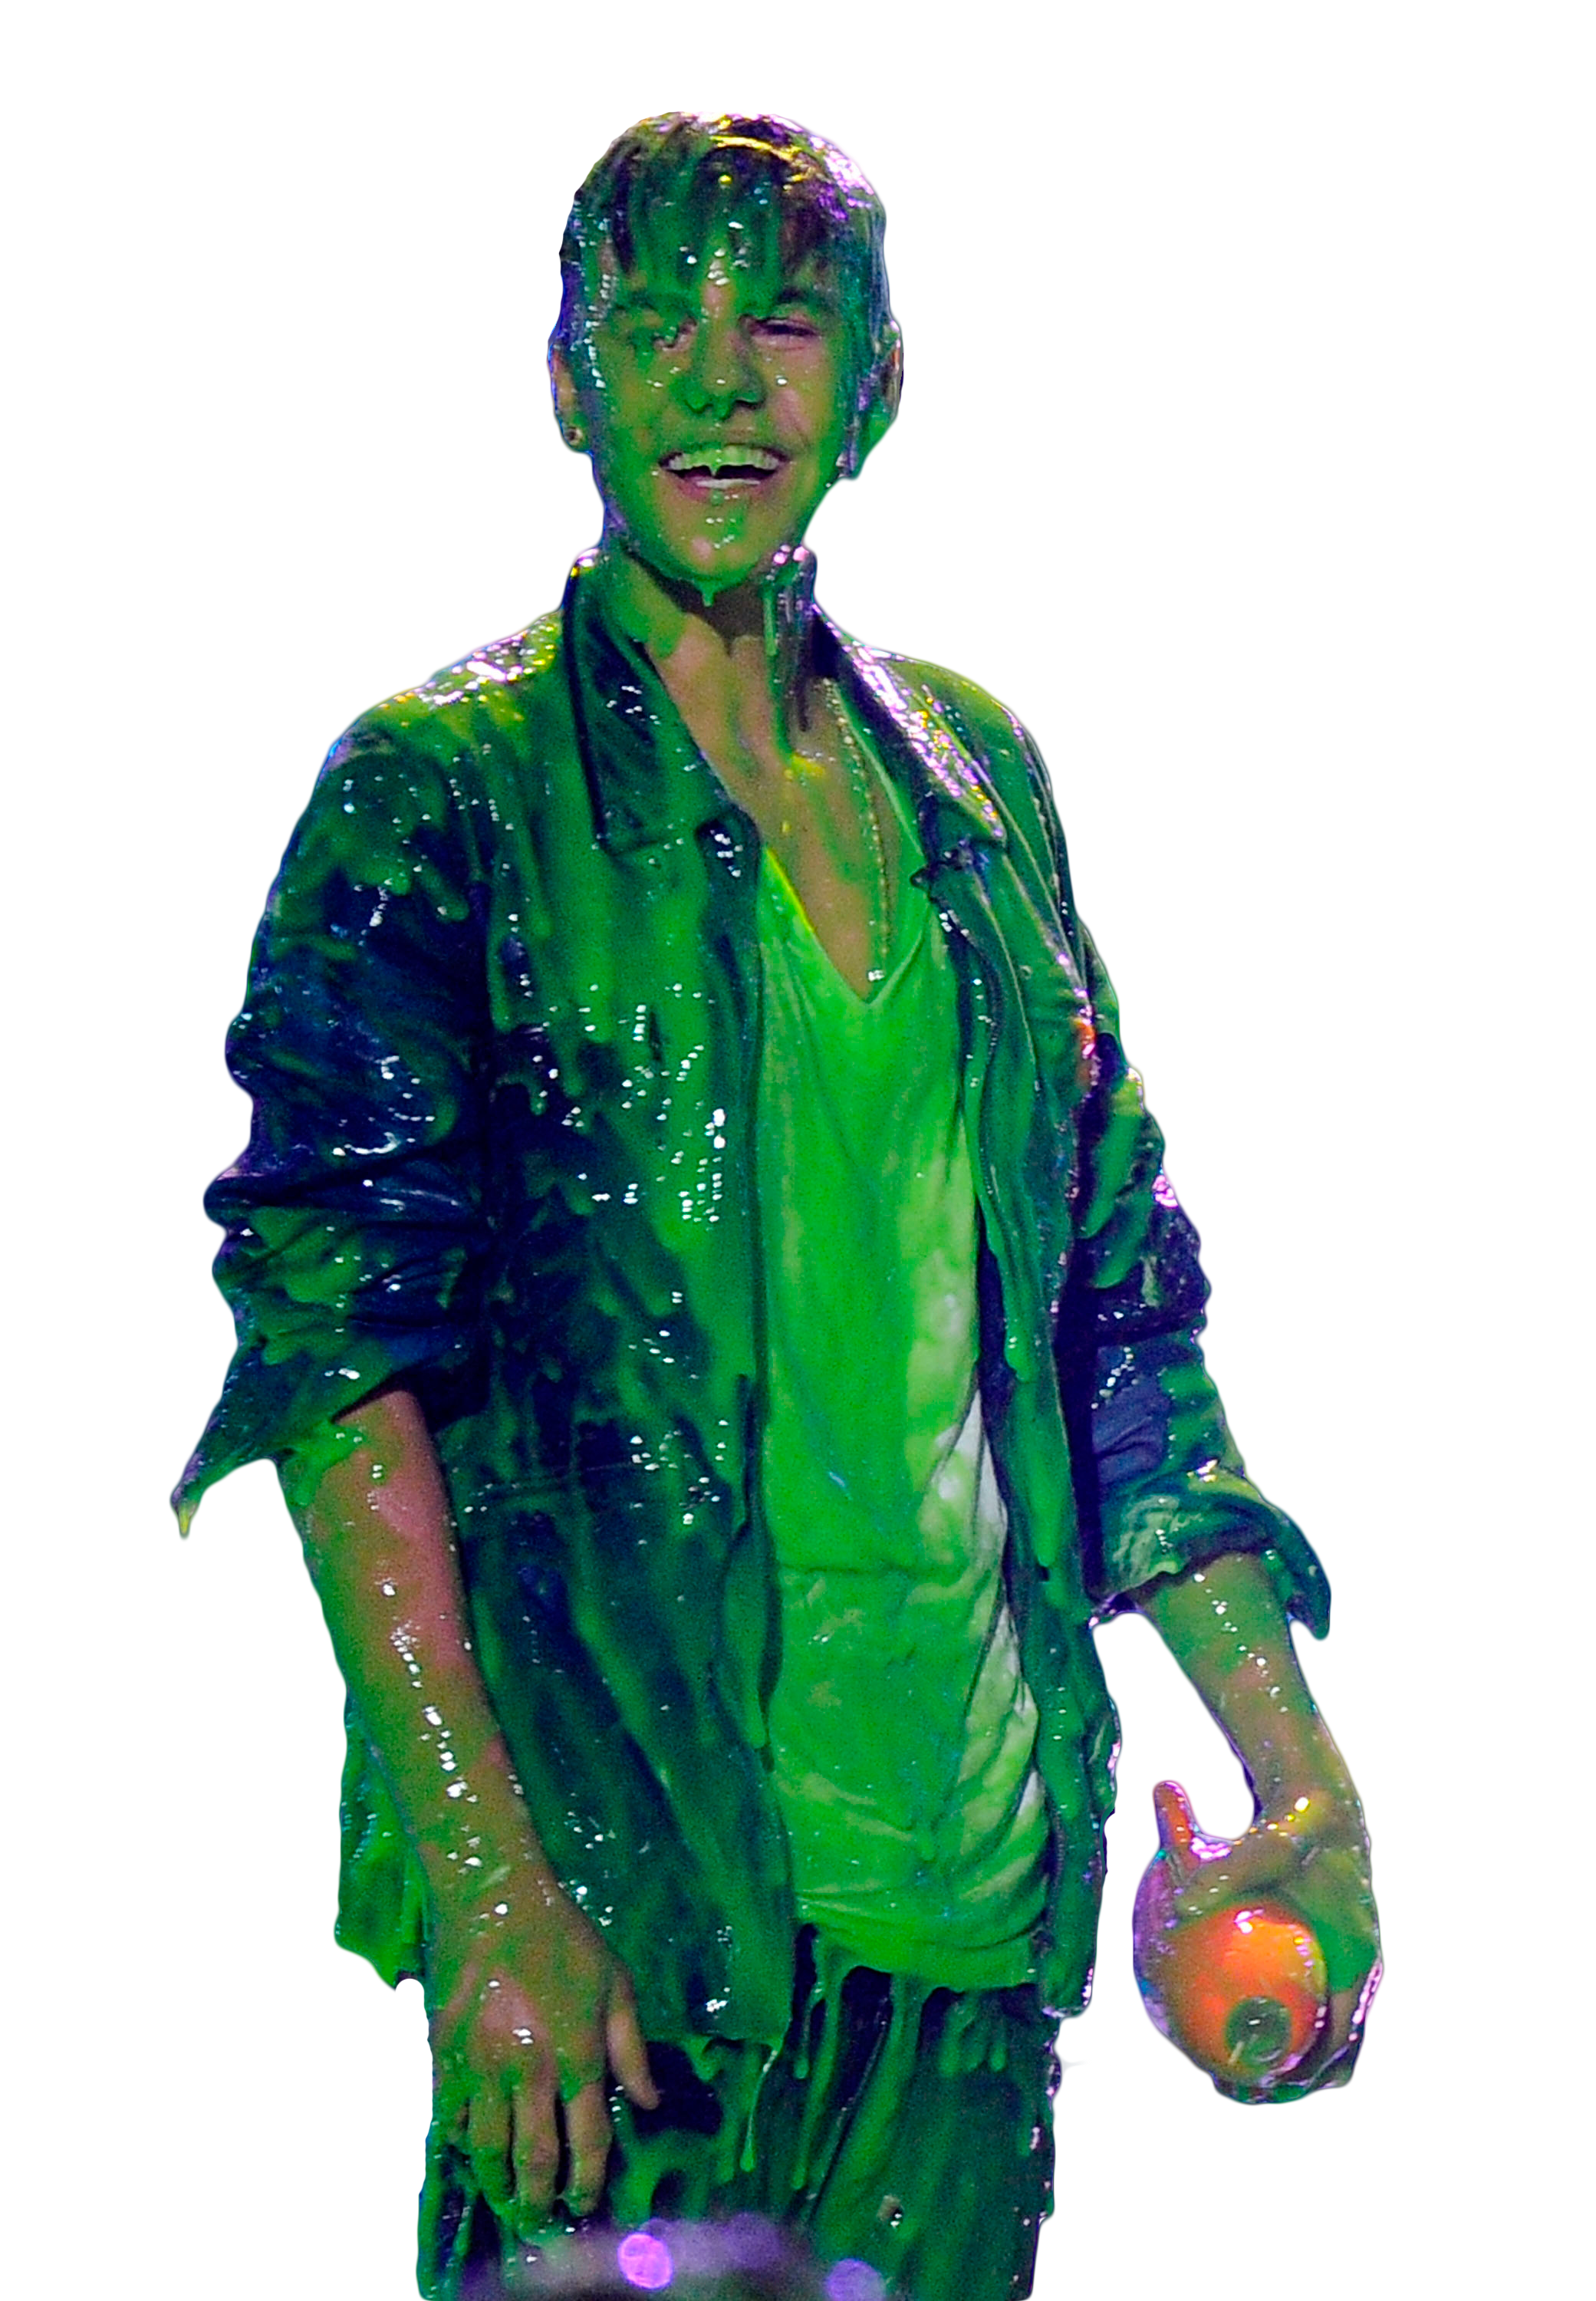 Justin Bieber Green Mucus